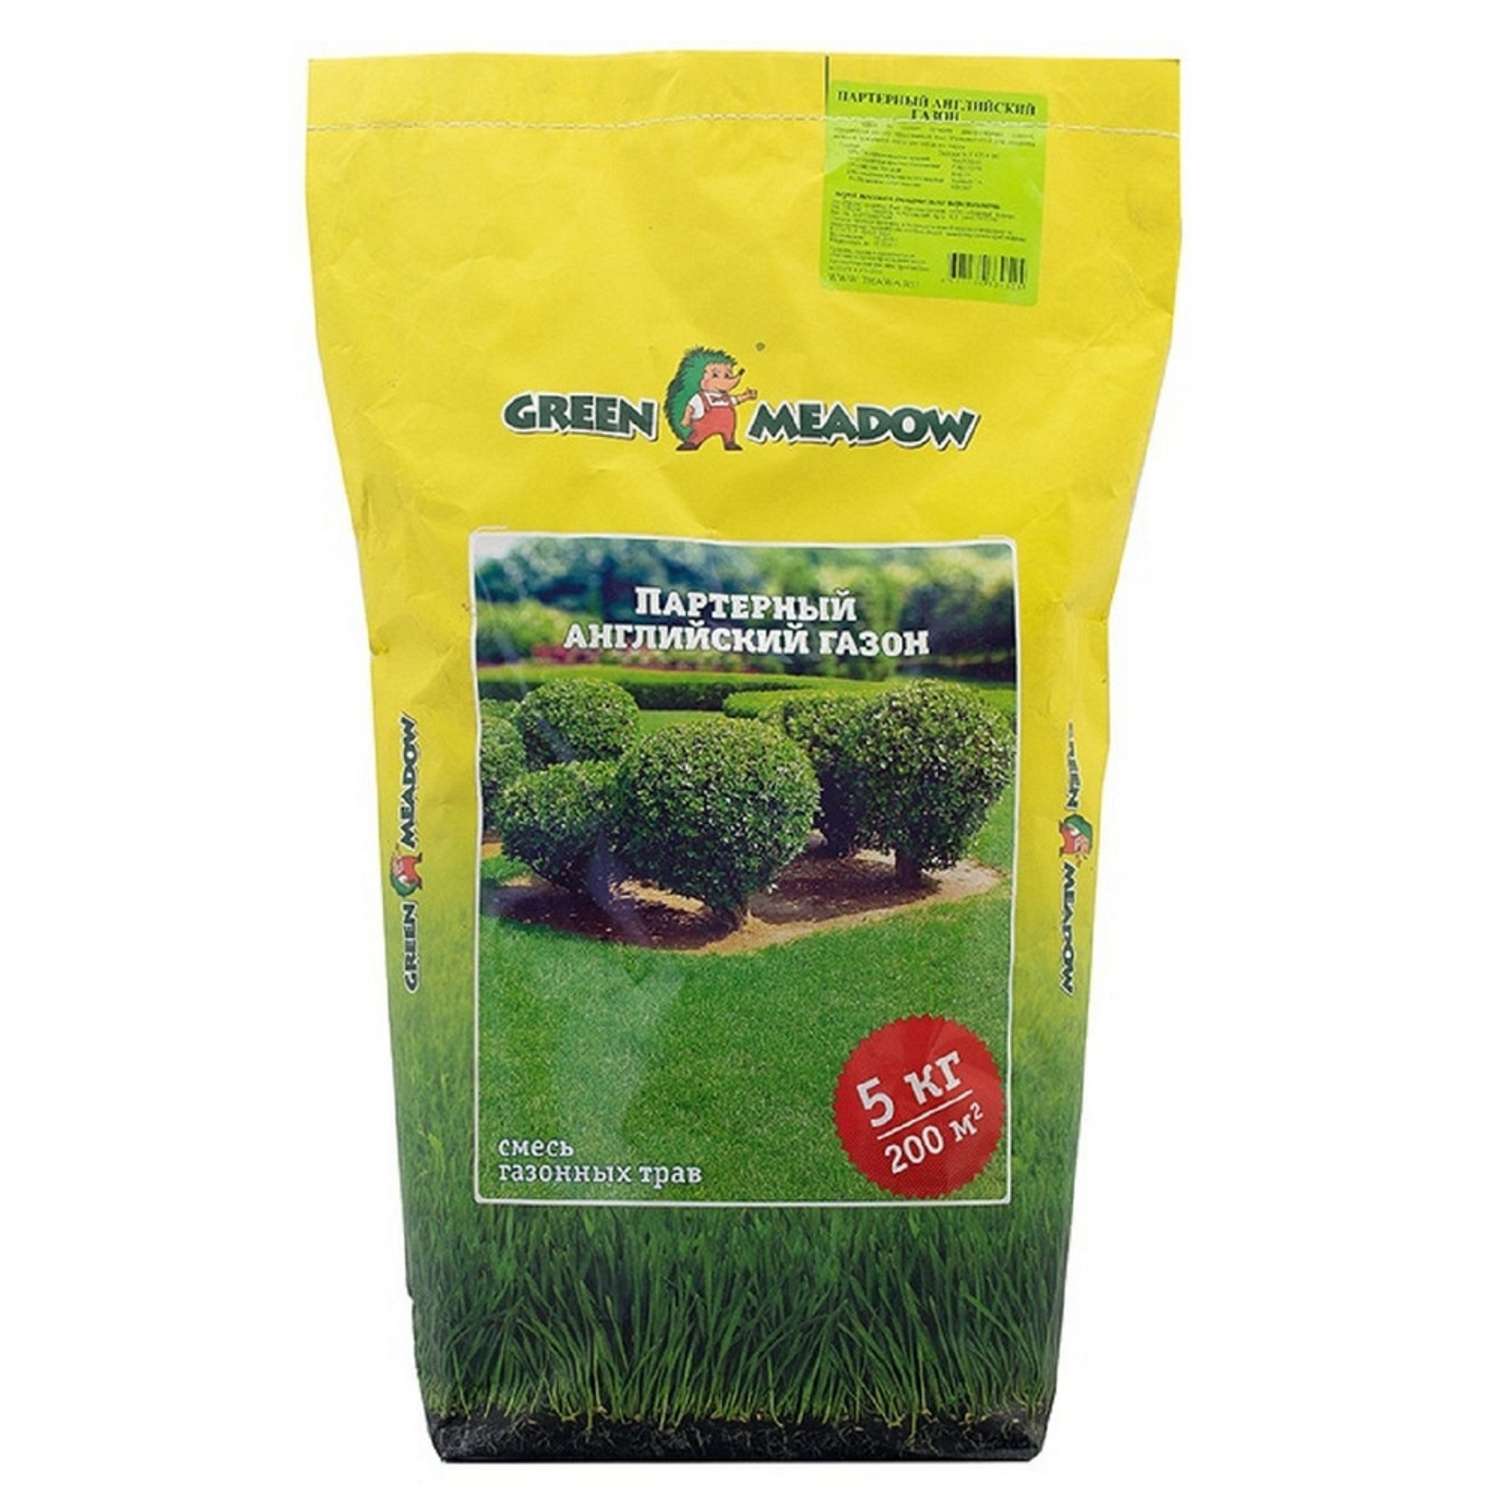 Семена трав GREEN MEADOW для газона Партерный английский 5 кг - фото 1